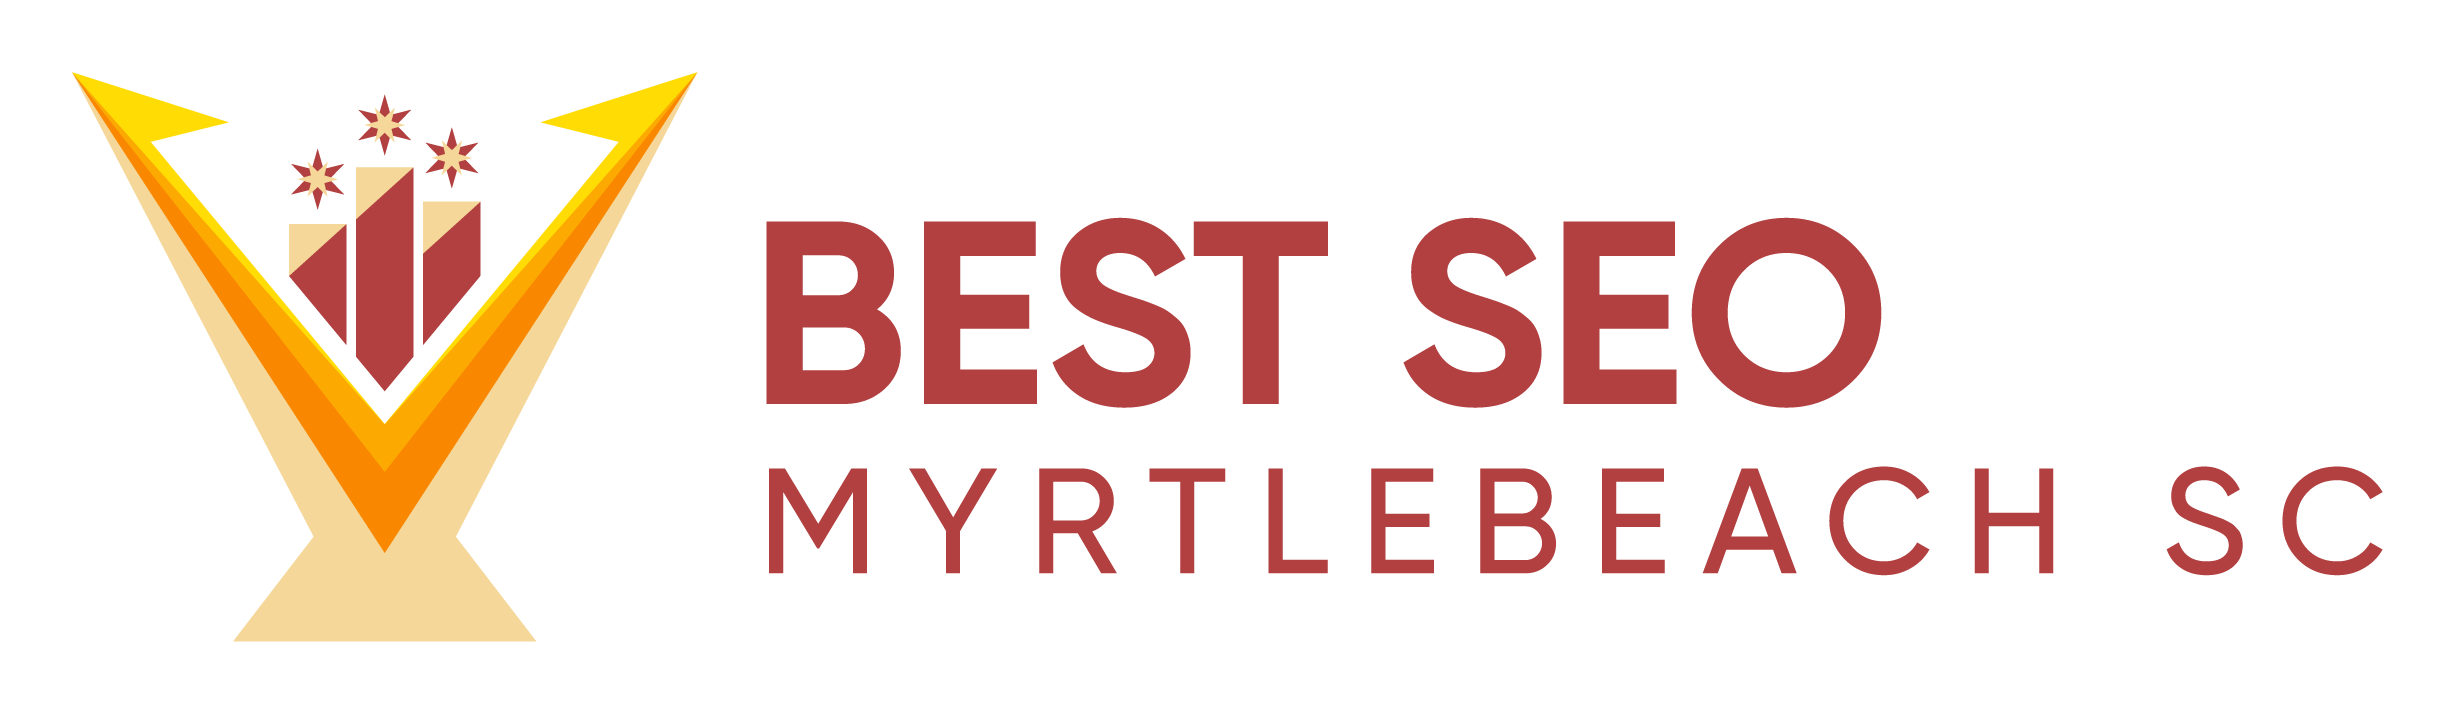 Best SEO Myrtle Beach SC Logo